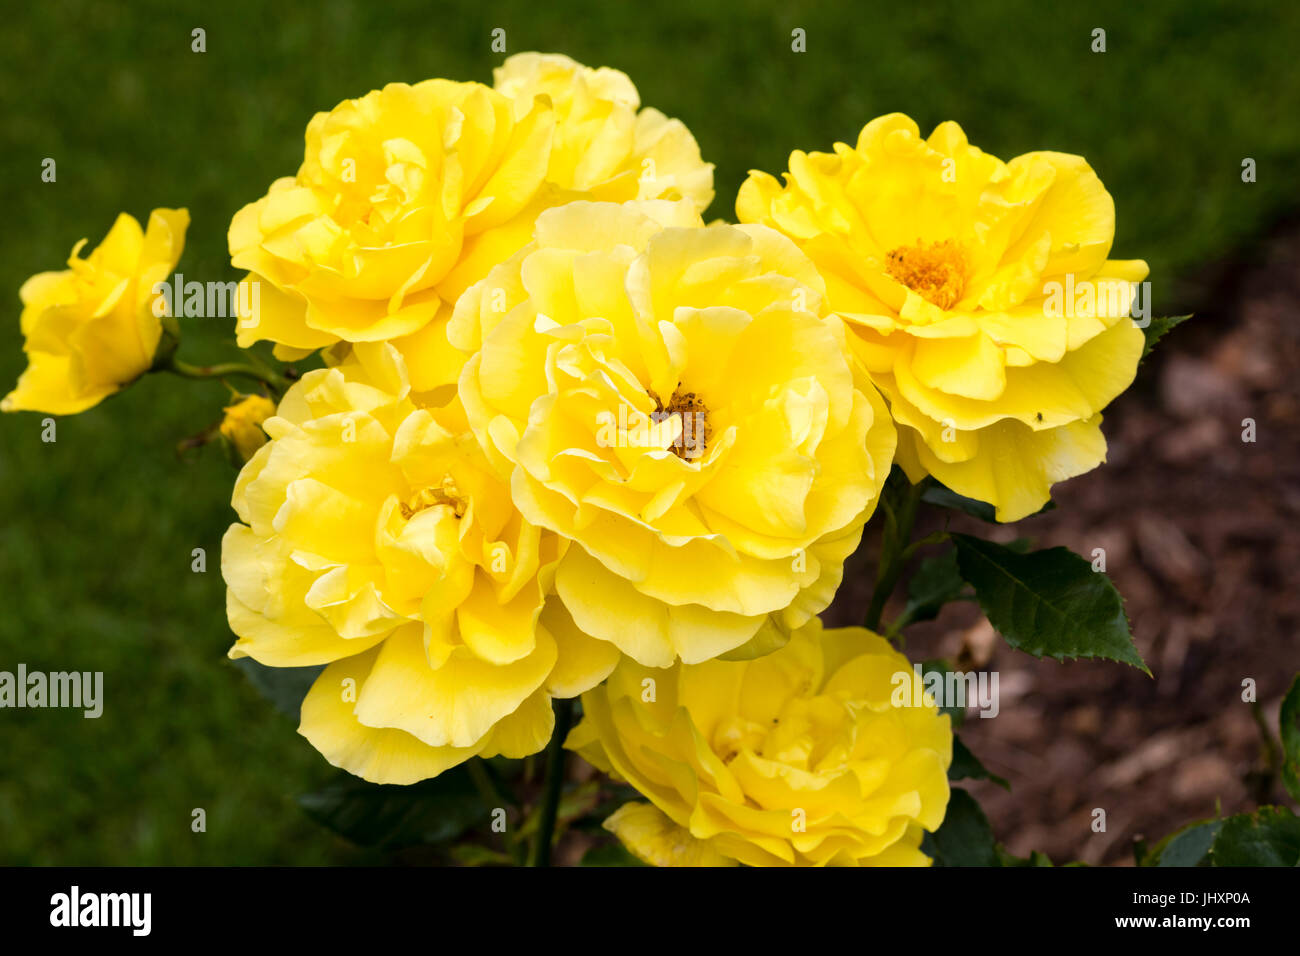 Yellow flowers of the fragrant floribunda rose, Rosa 'Korresia' Stock Photo